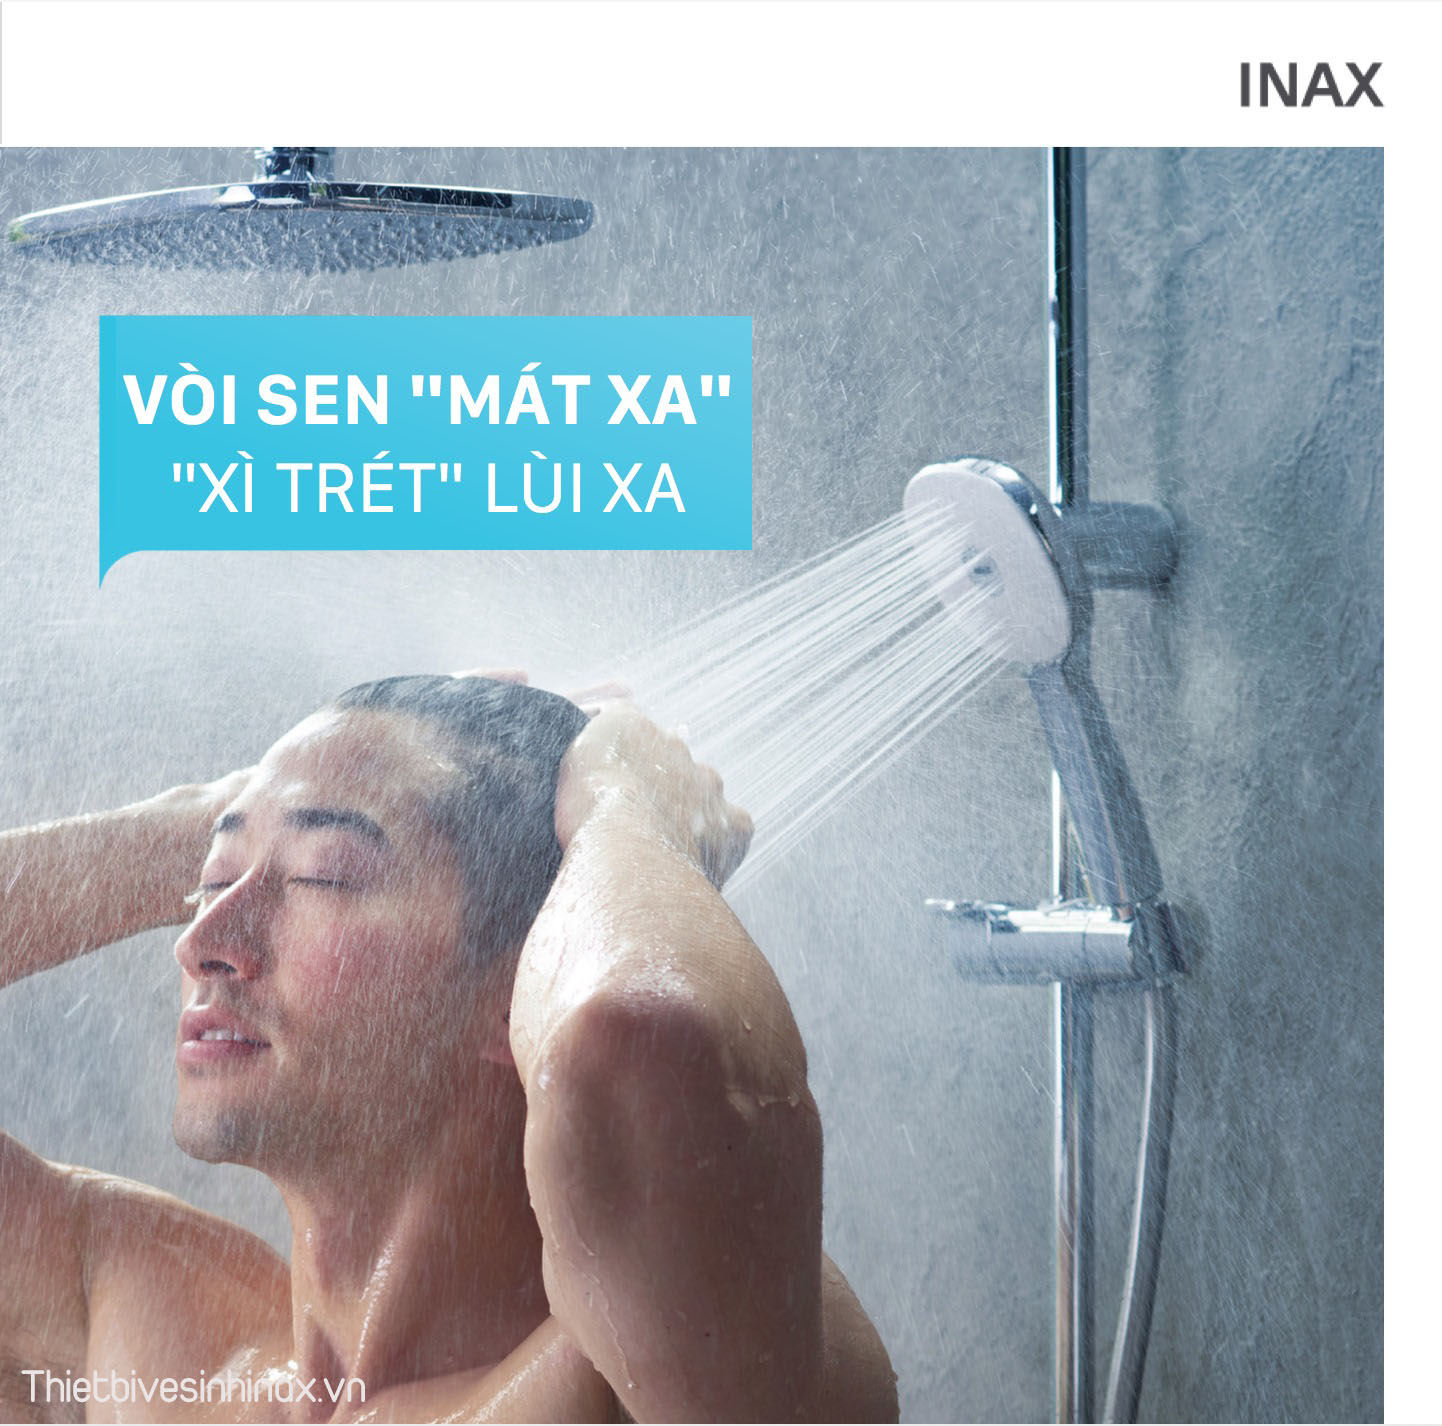 Sen tắm INAX Aqua Shower Thế hệ mới 2021